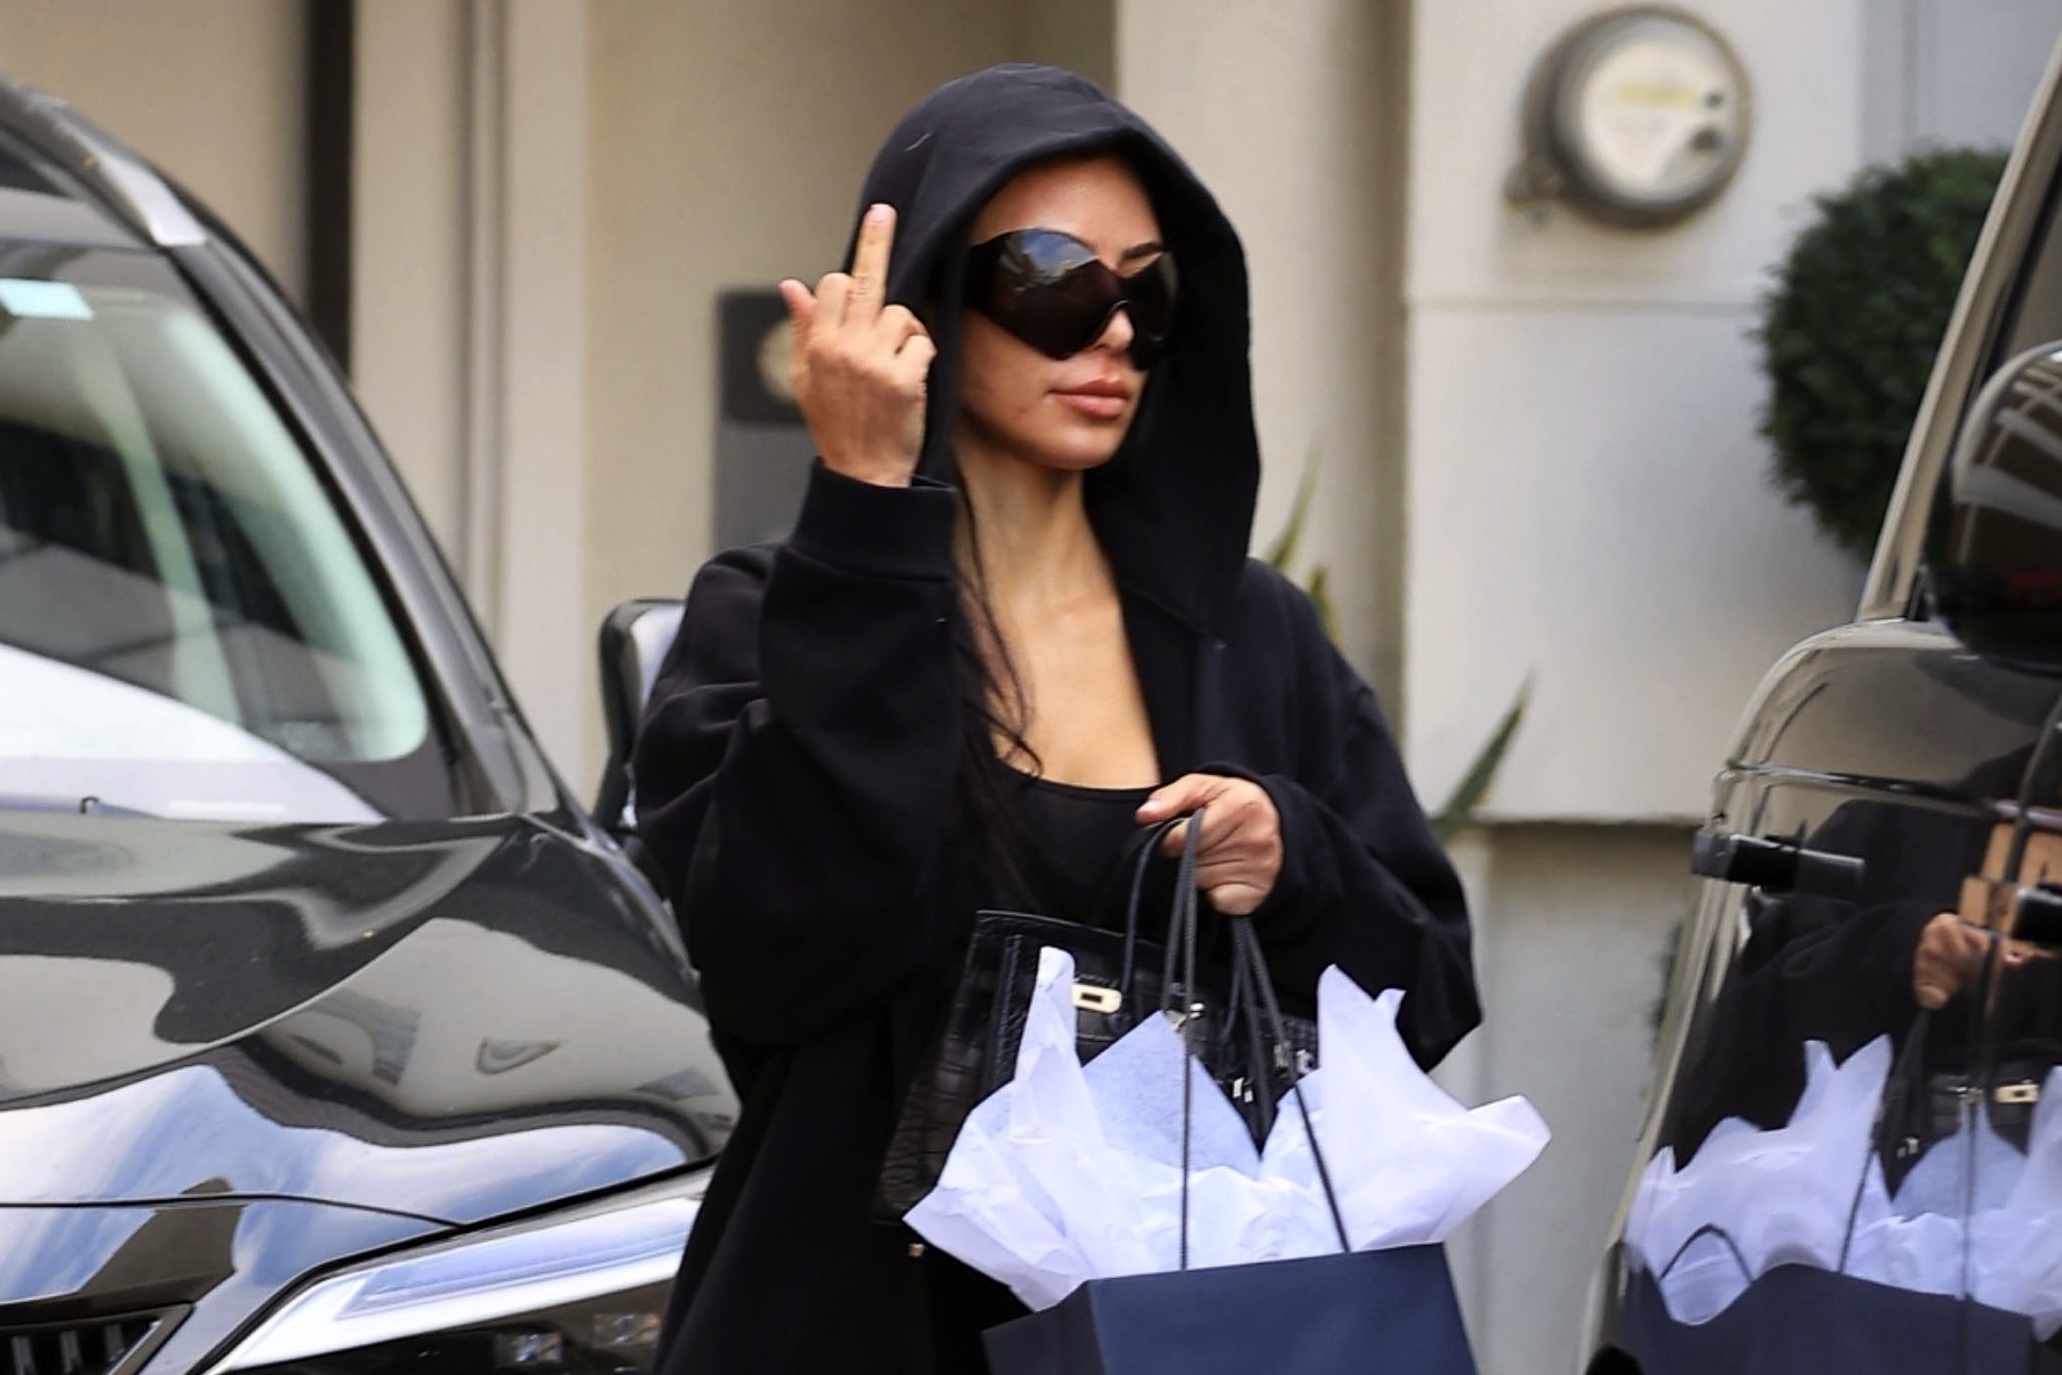 Kim Kardashian wears Balenciaga sunglasses & a black sweatsuit while giving paparazzi the middle finger